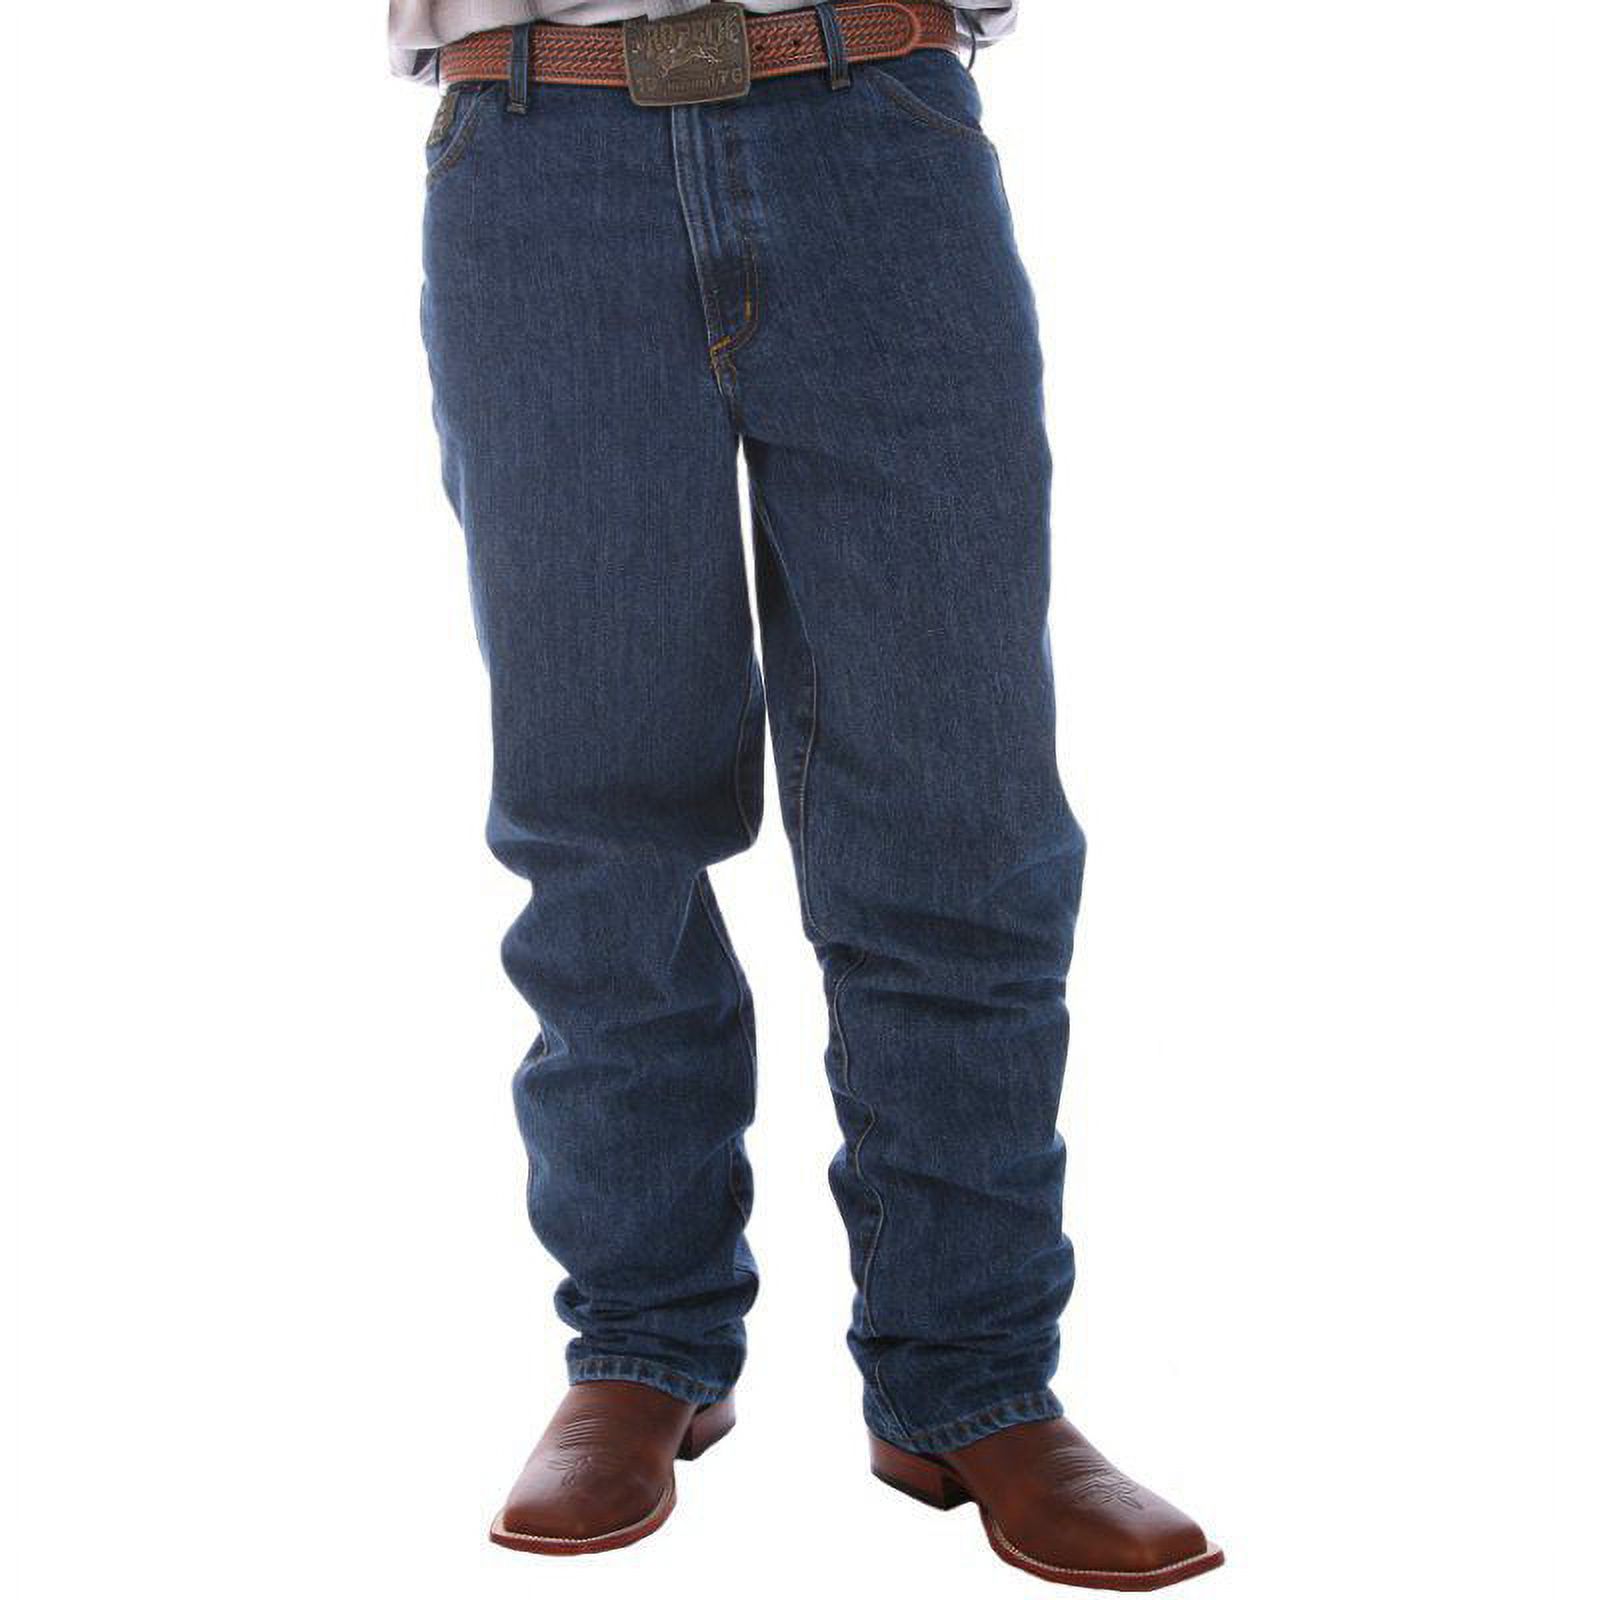 Cinch Apparel Mens Green Label Original Fit Jeans 34x30 Dark Stonewash - image 4 of 4